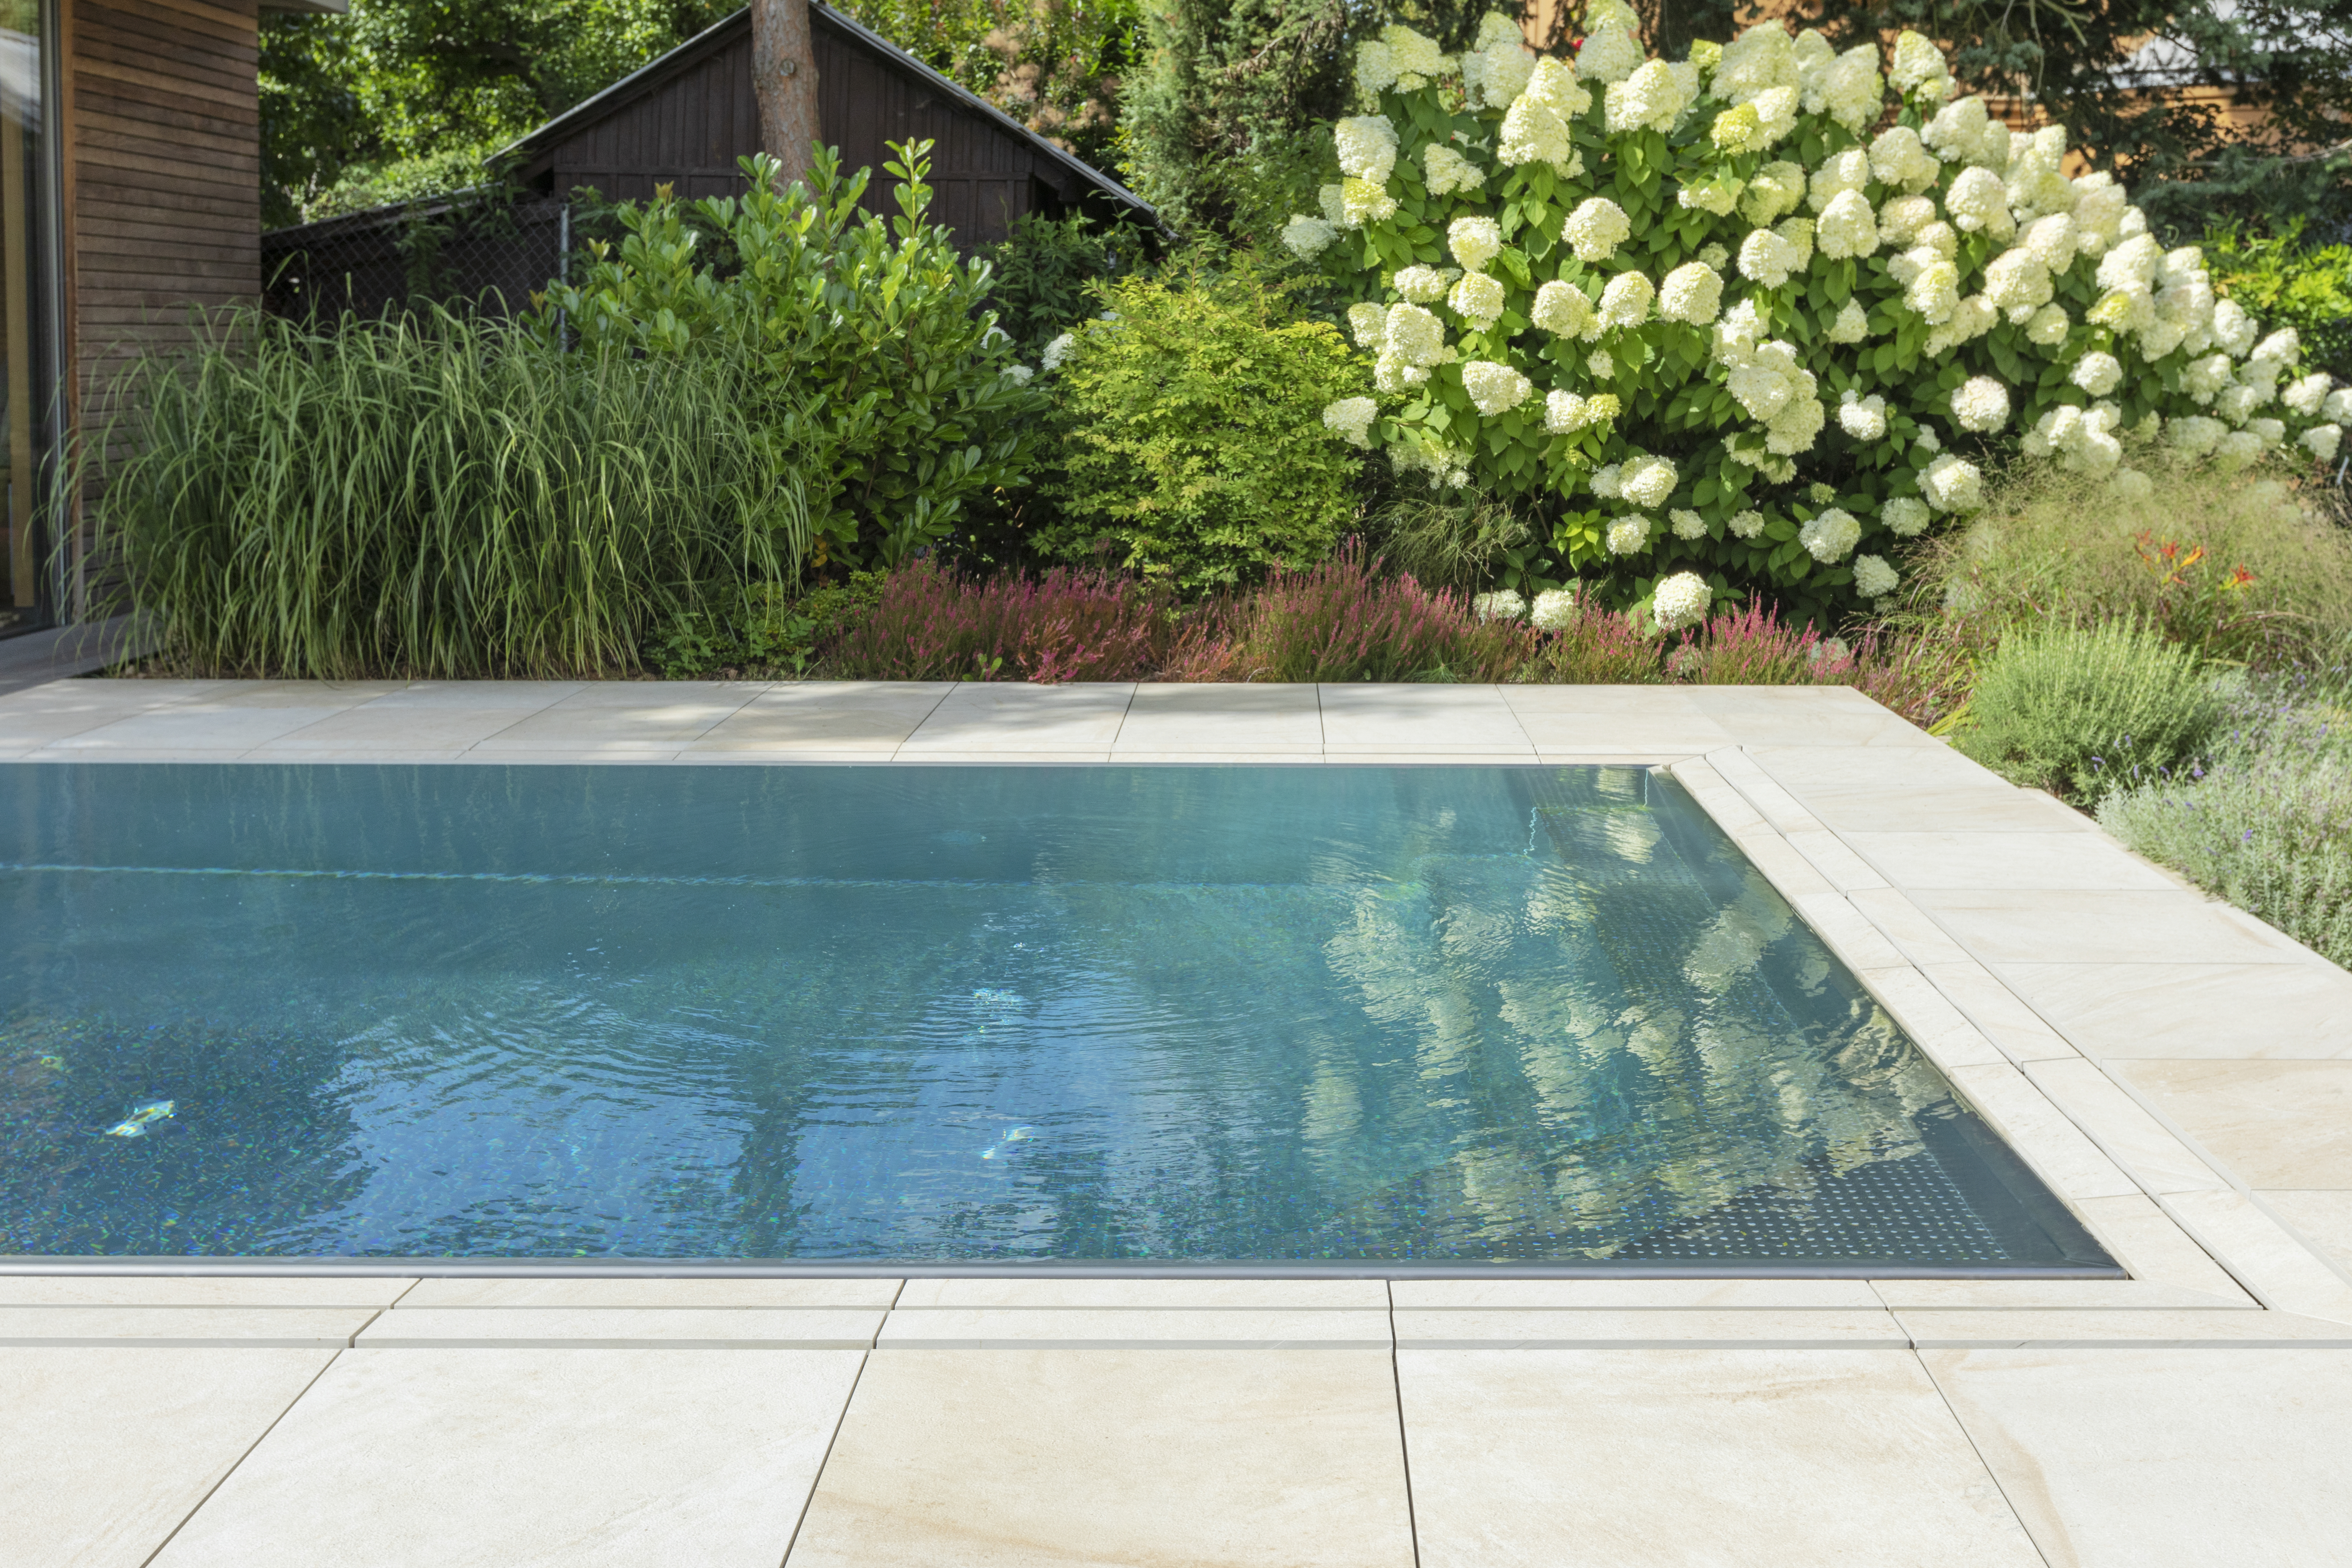 IMAGINOX luxury decklevel pool from stailness steel